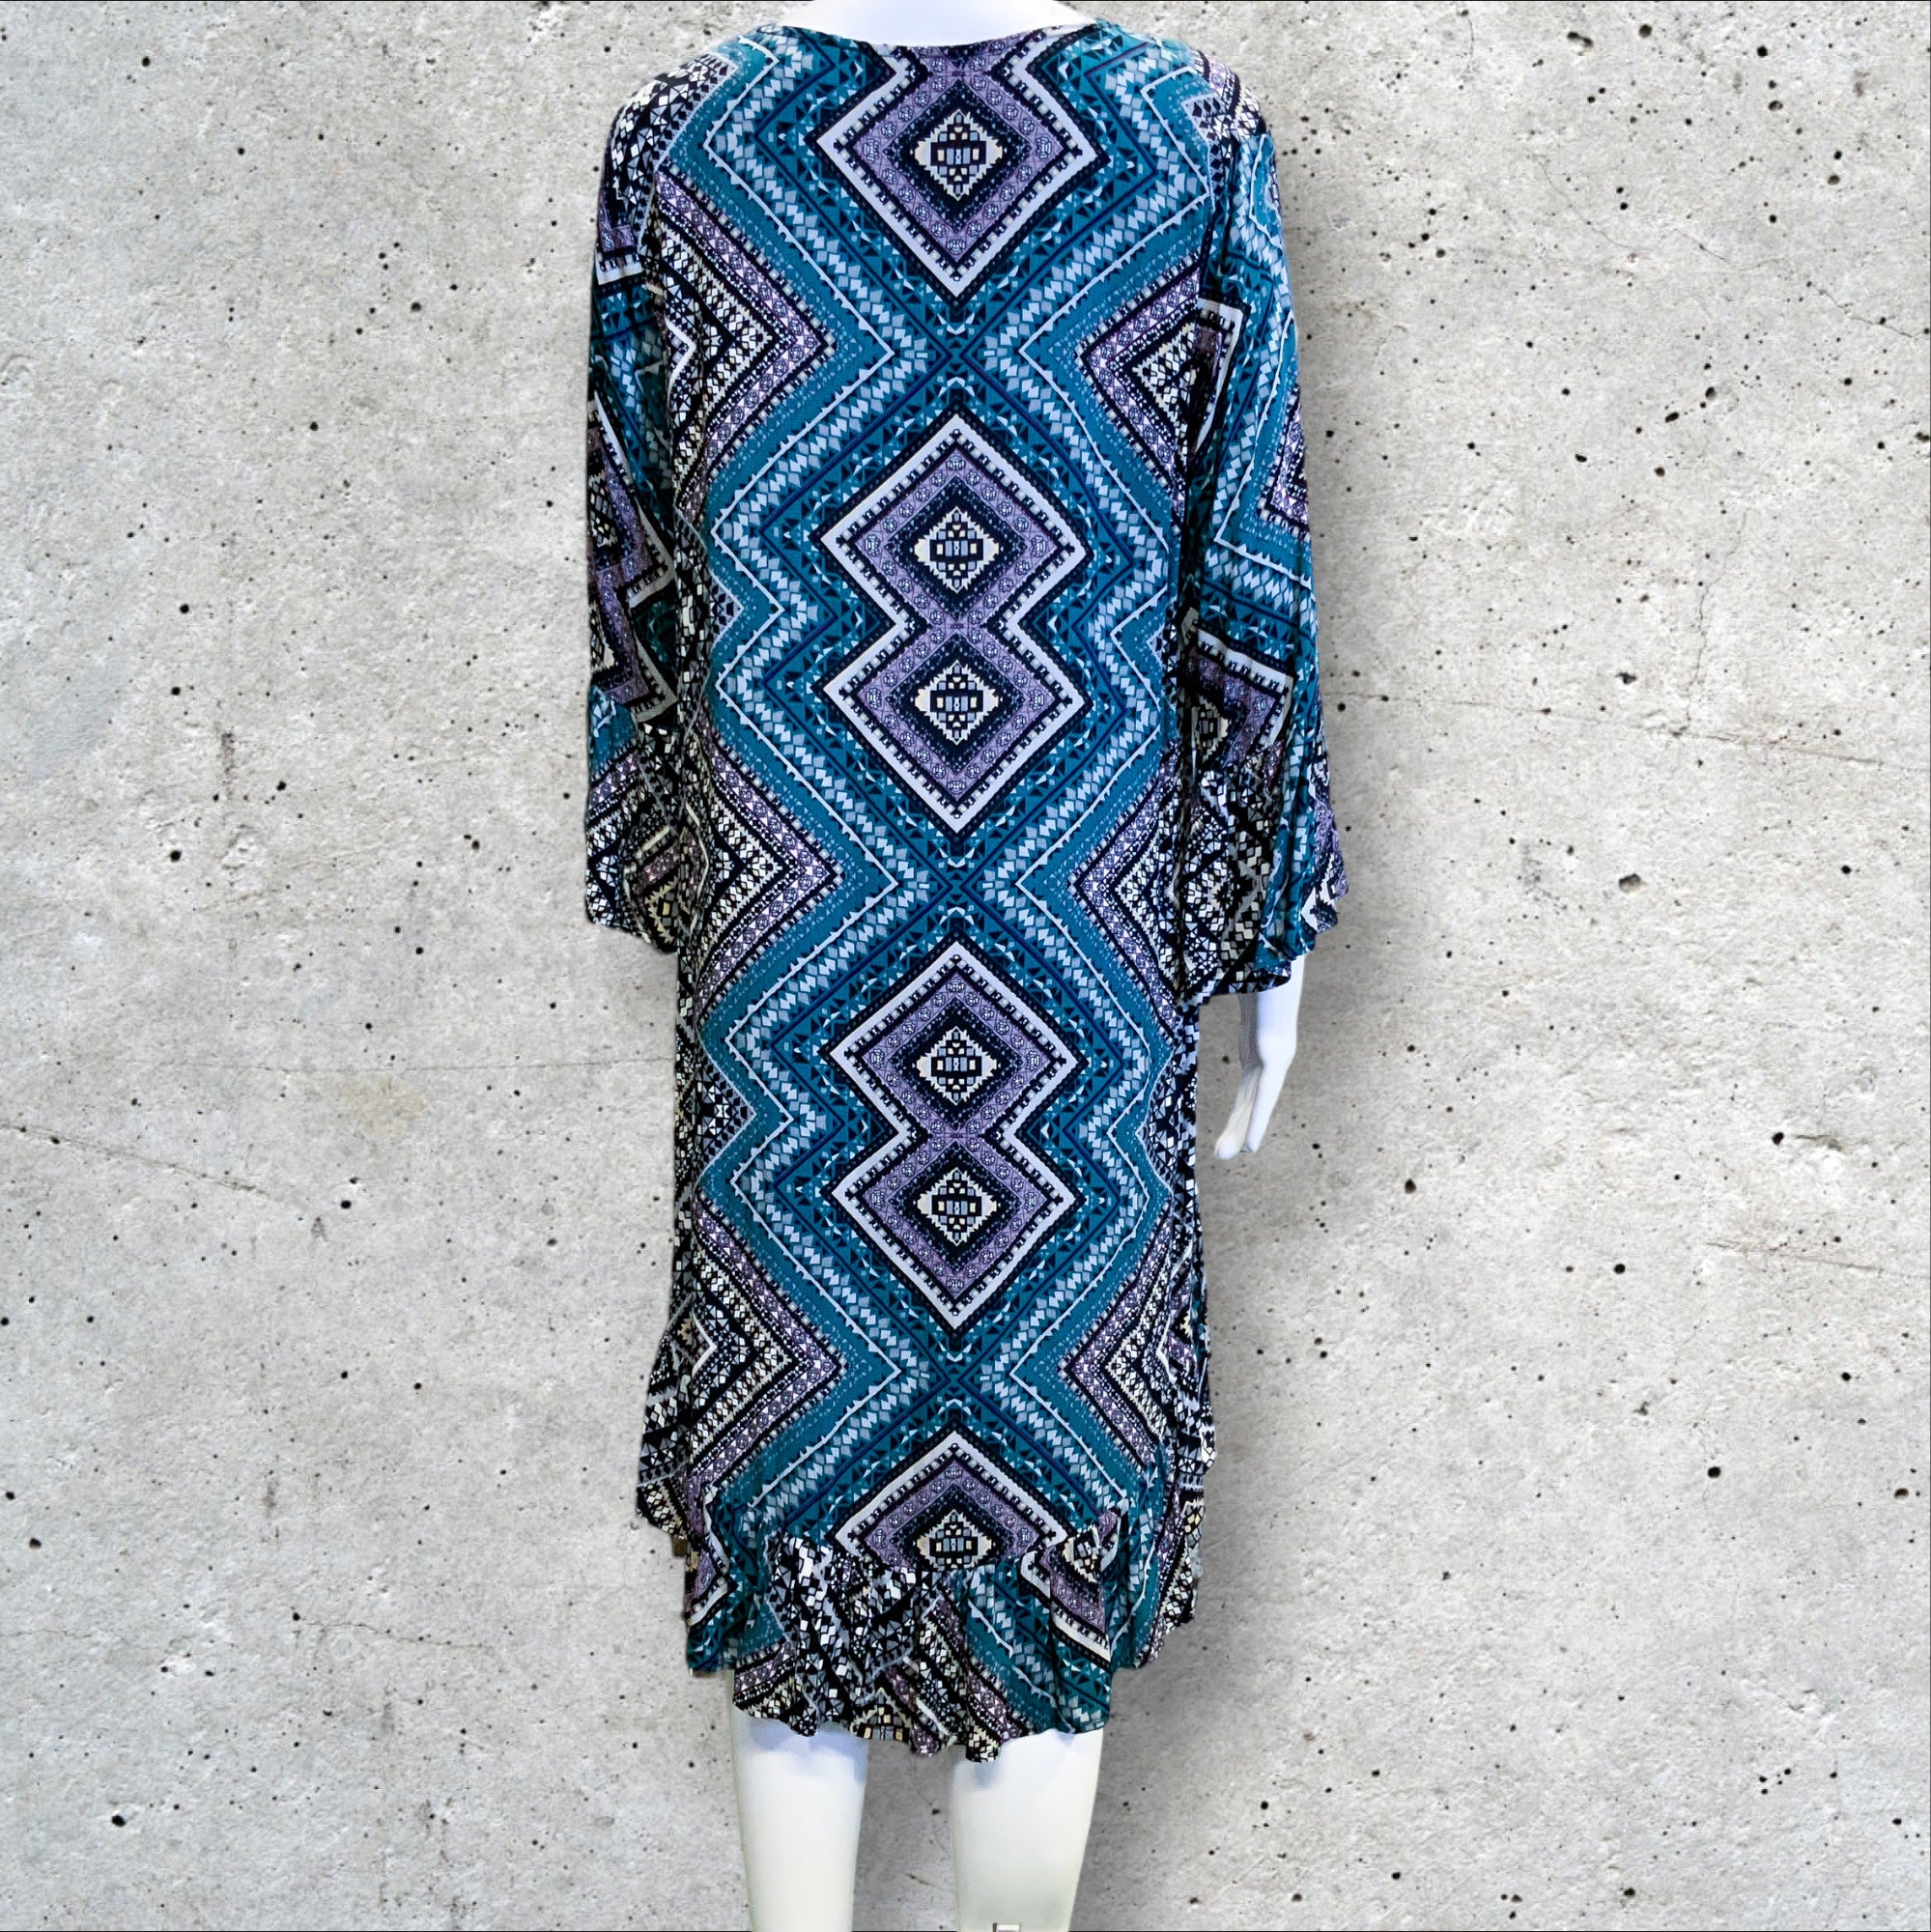 BNWT CAROLINE MORGAN Hi/Lo 3/4 Sleeve Aztec Print Tunic Top - Size 12